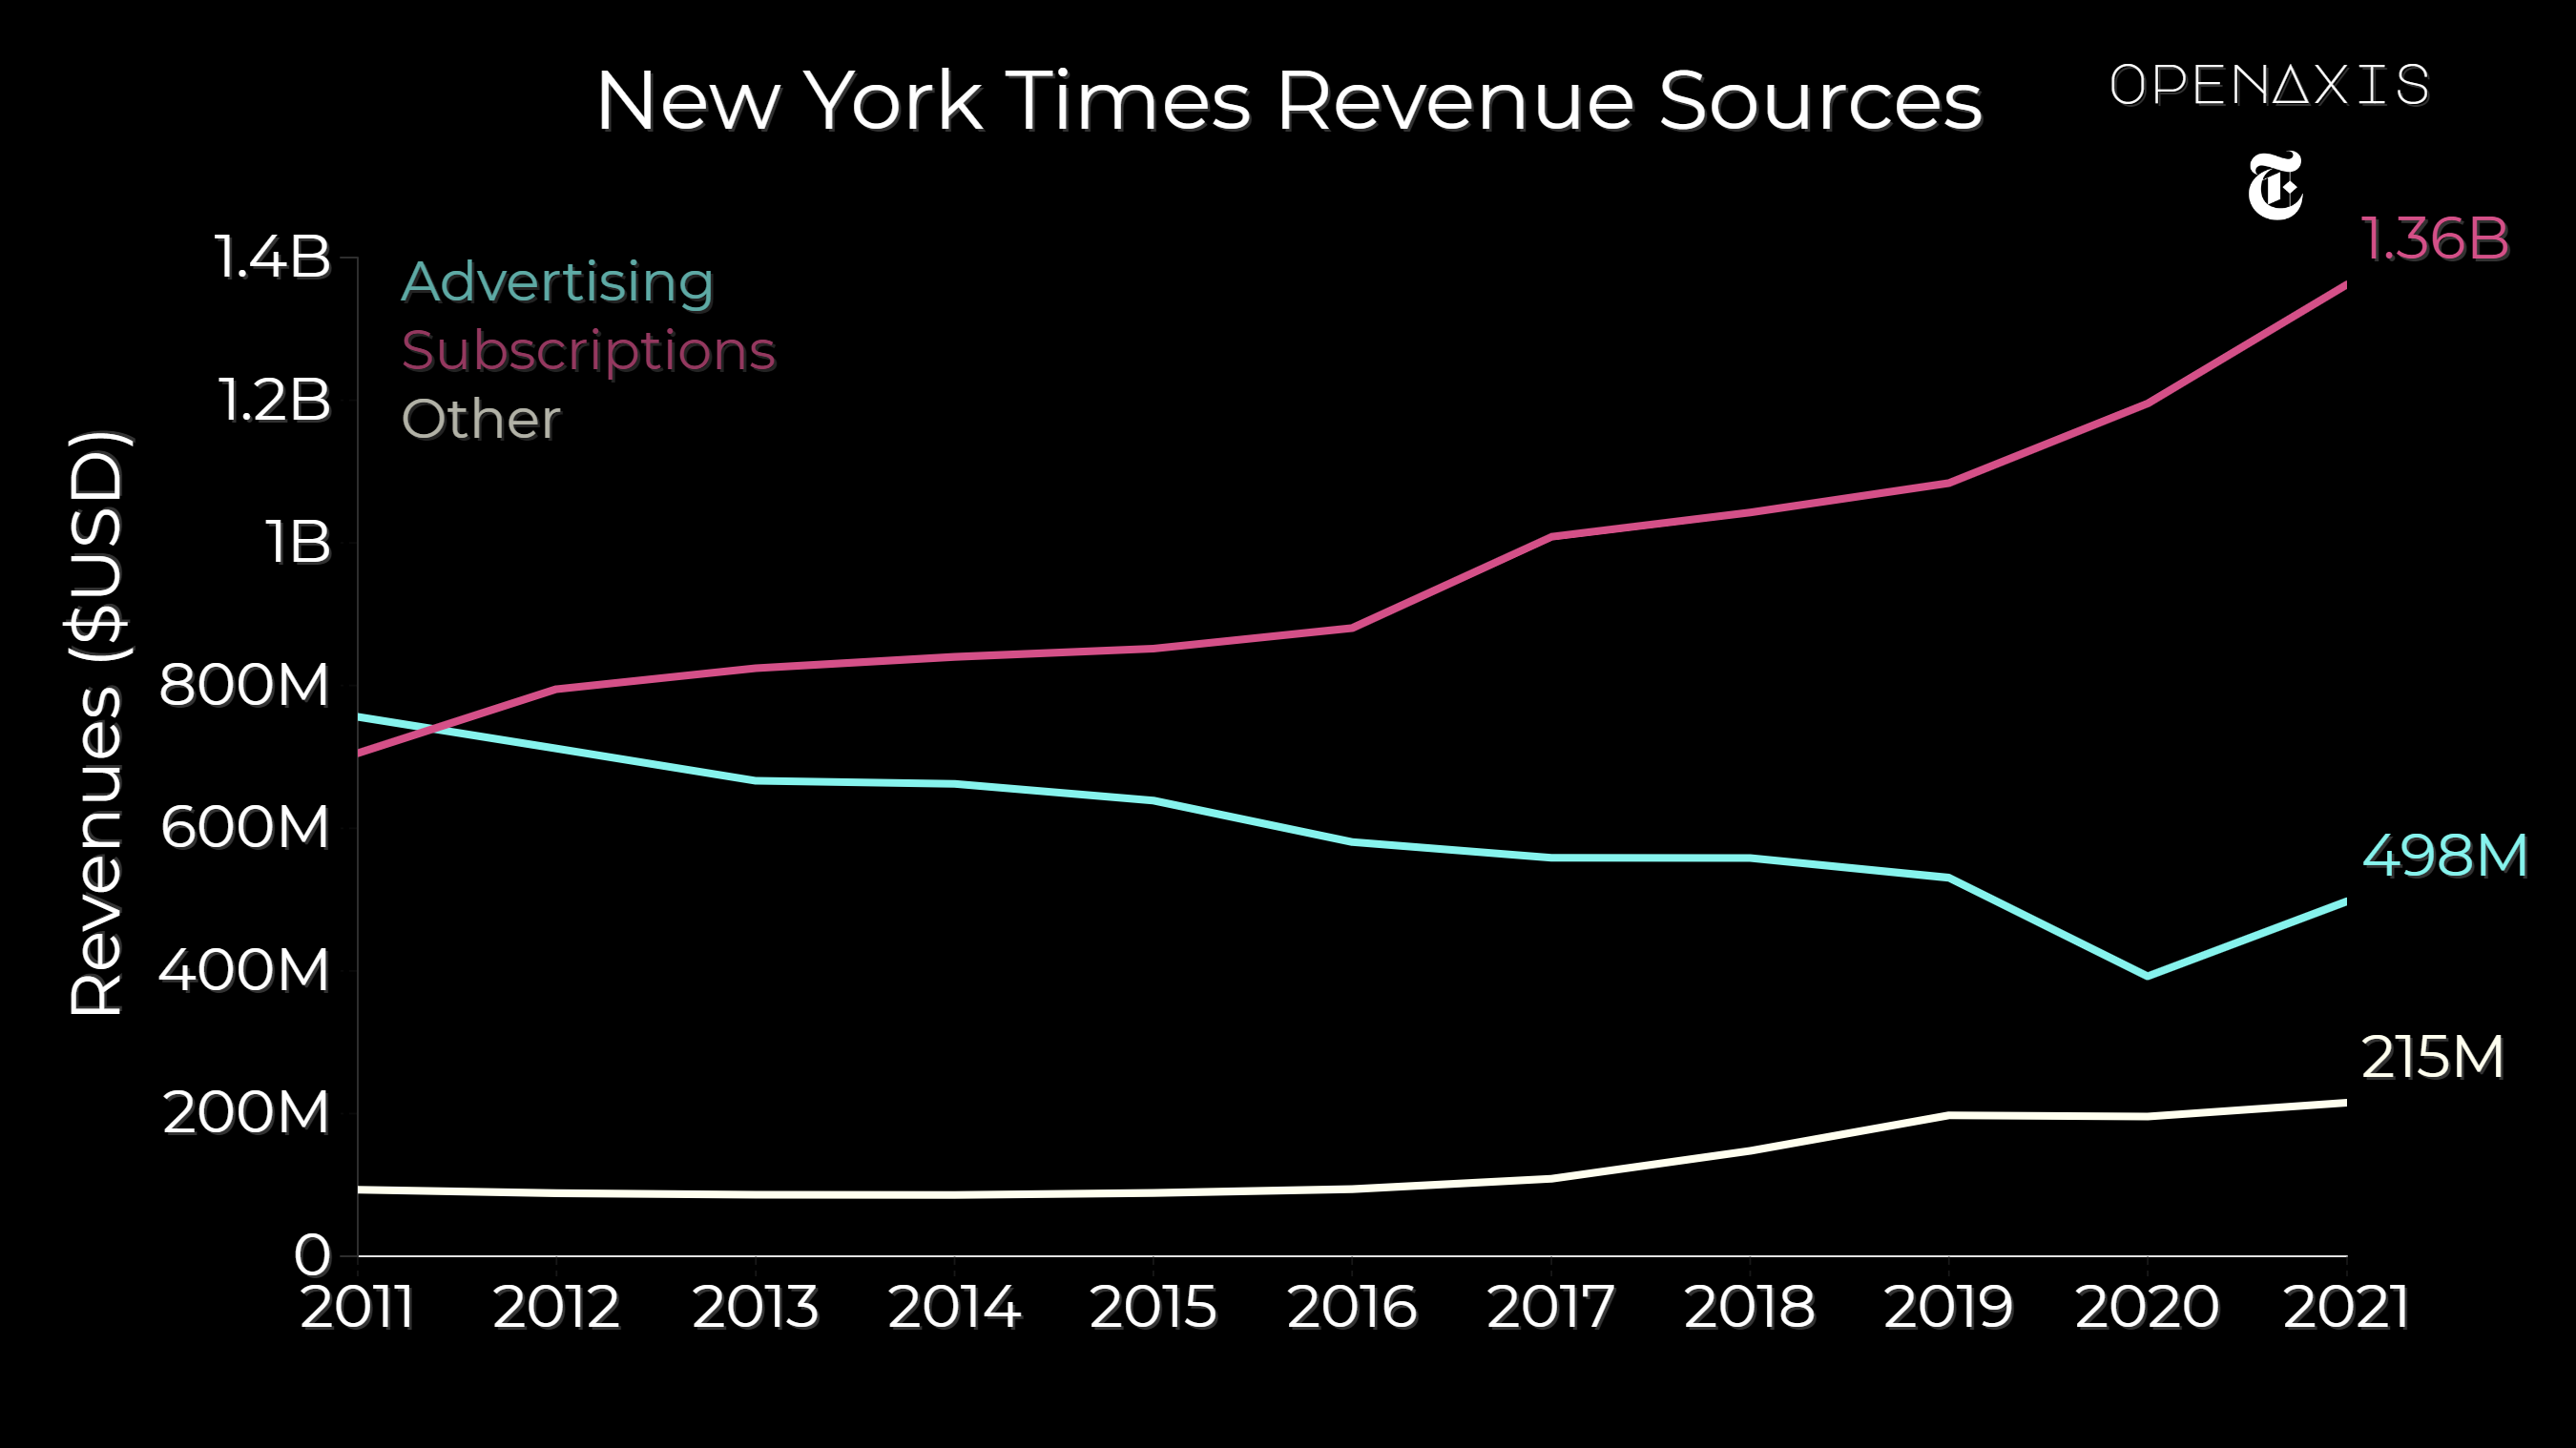 "New York Times Revenue Sources"